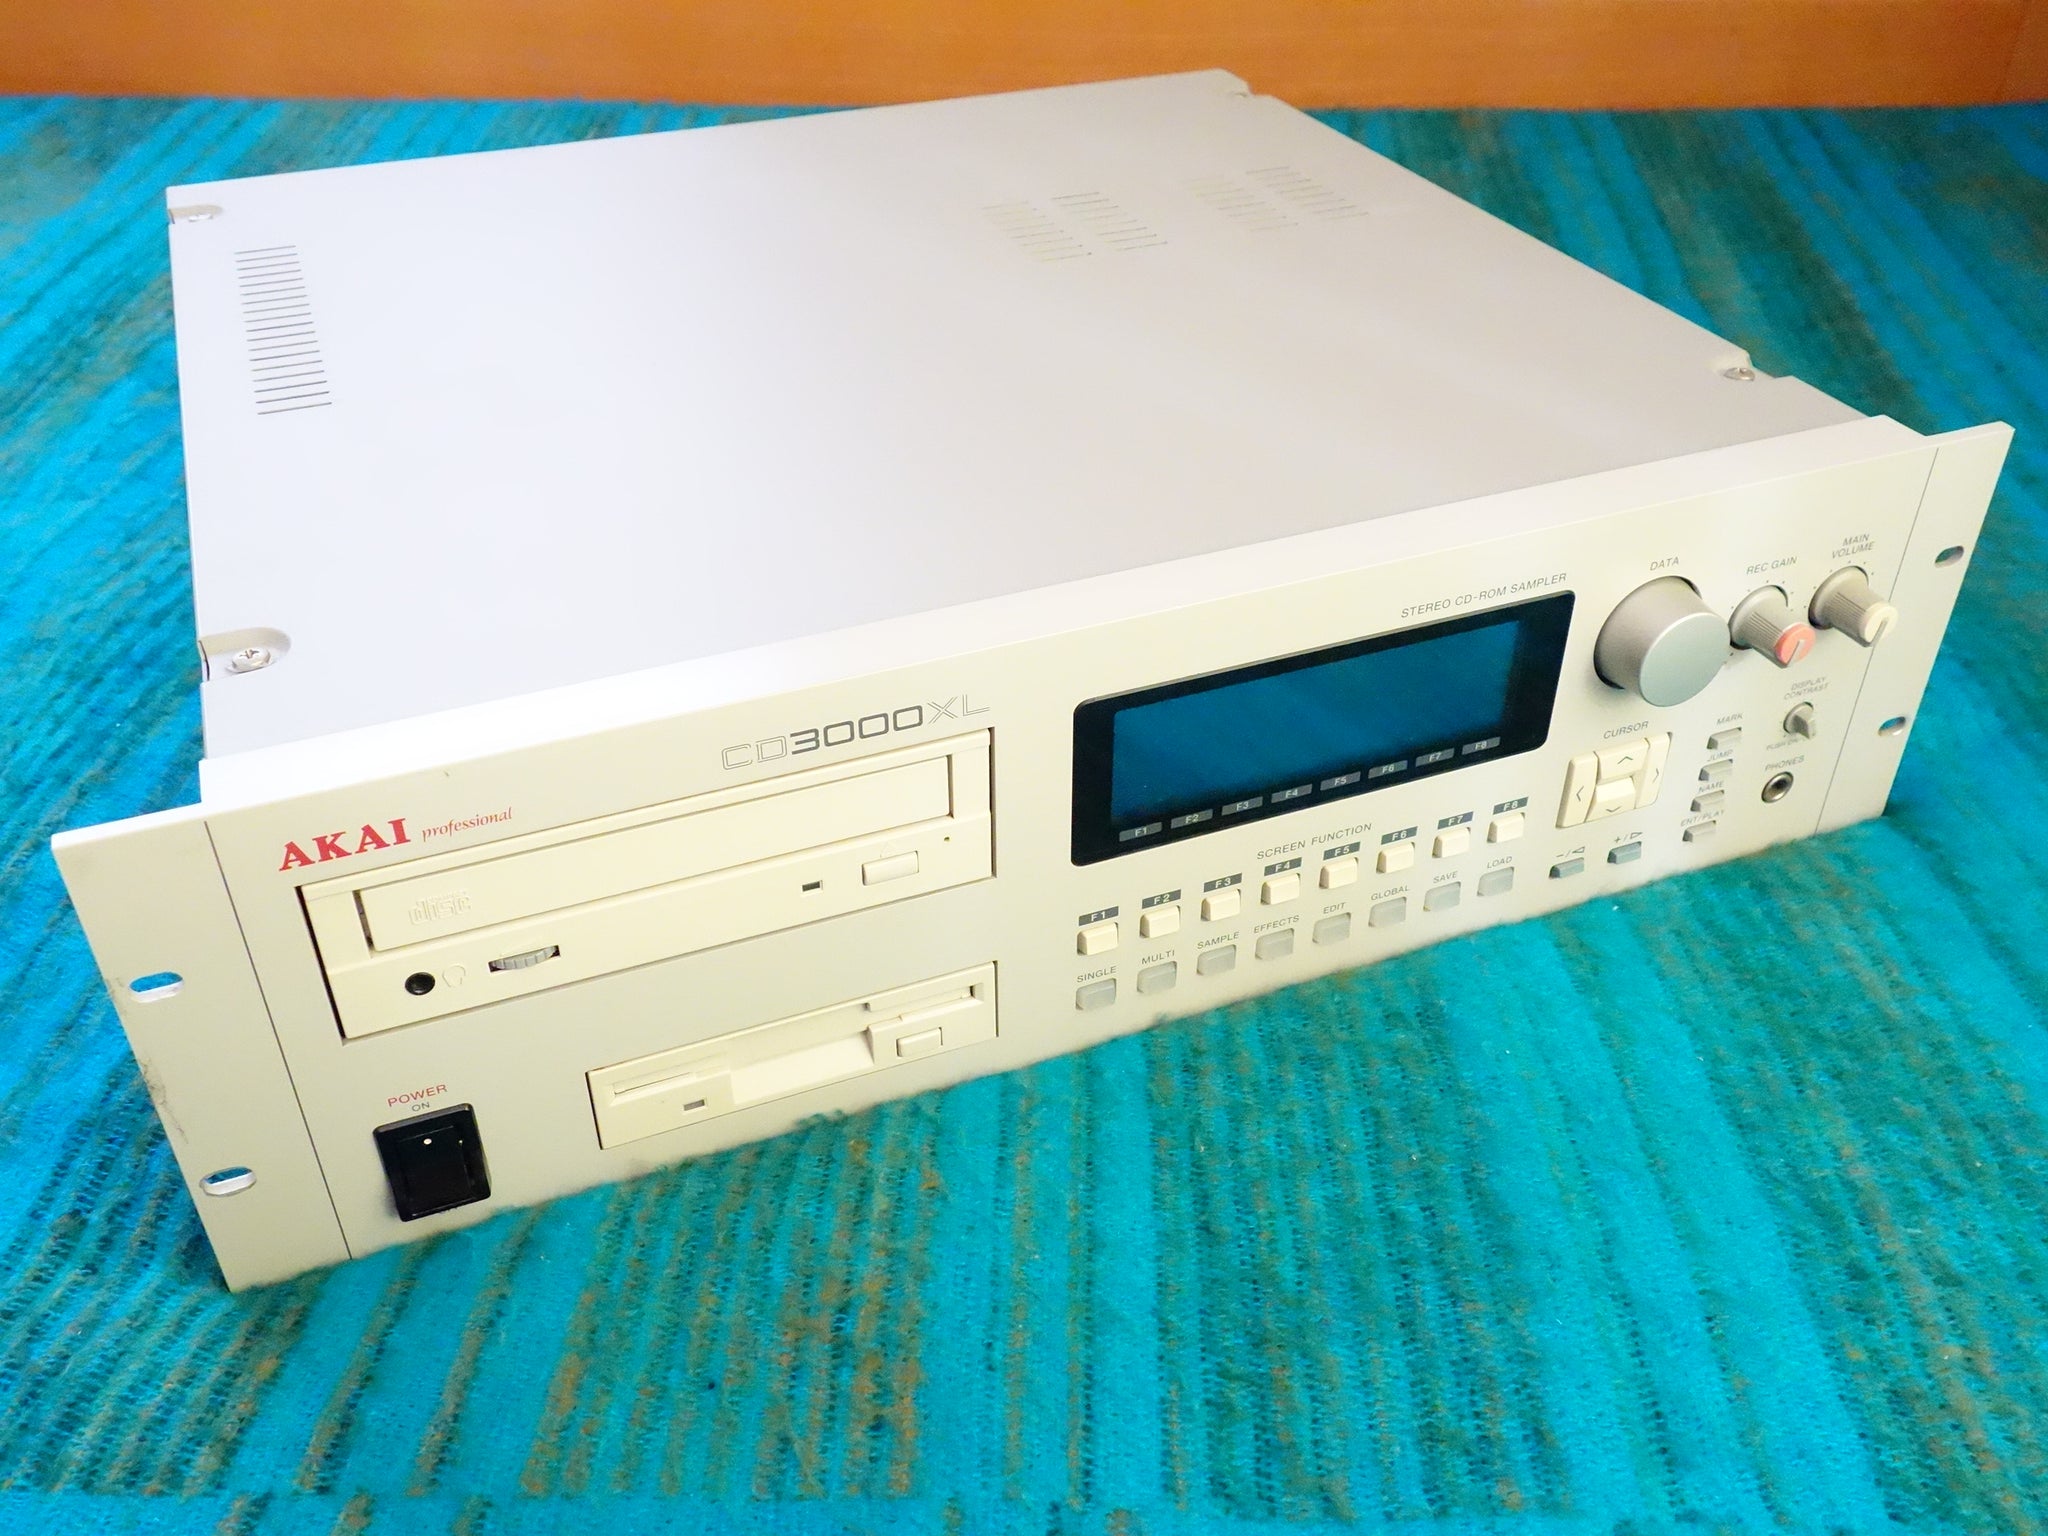 Akai CD3000XL Sampler w/ 16MB Memory - E09